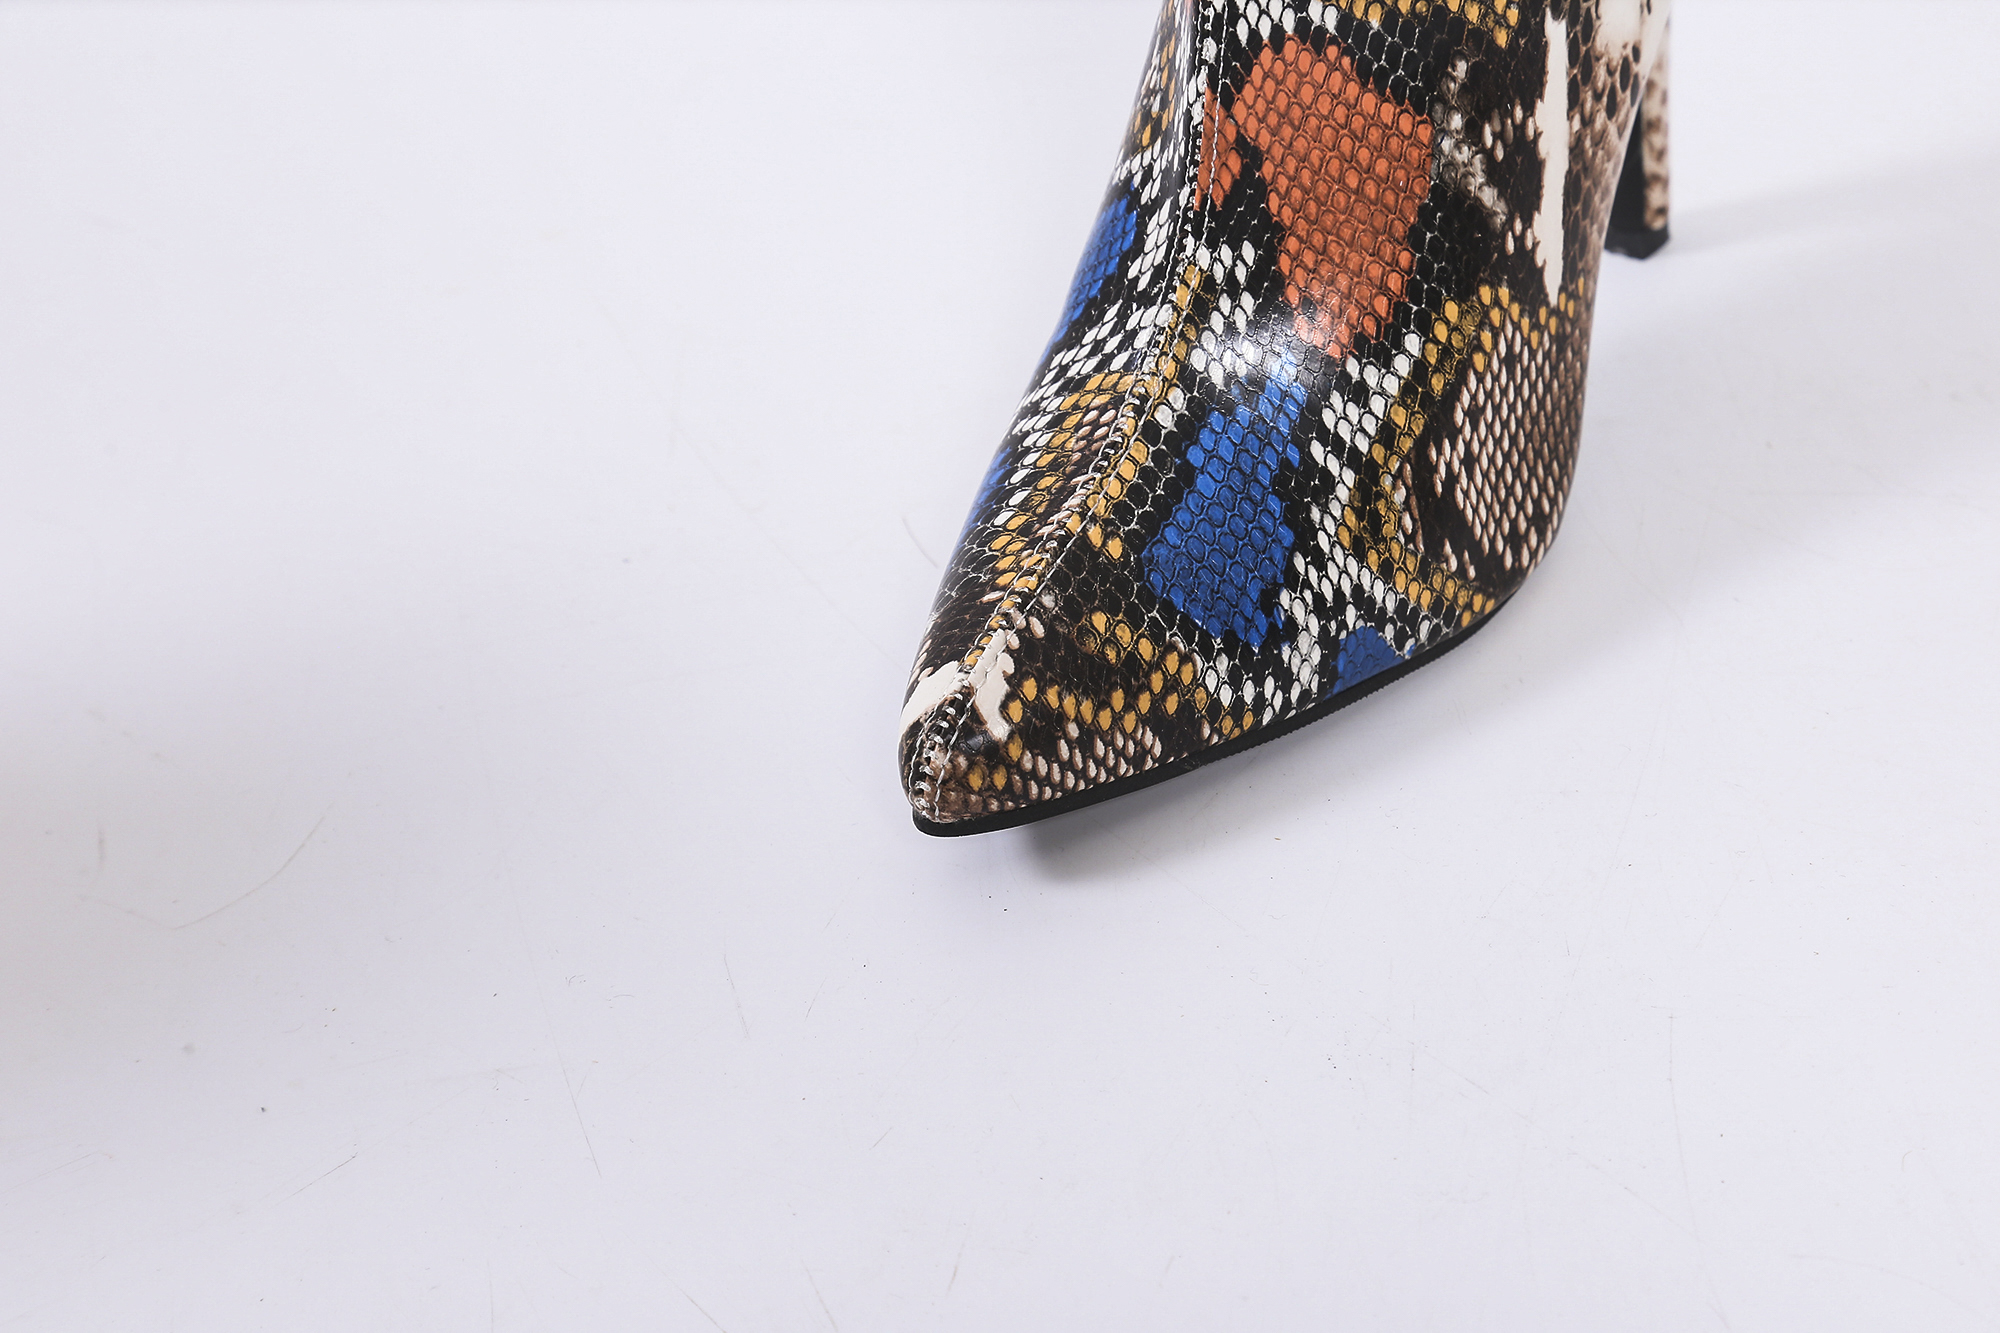 point-toe snakeskin stiletto short boots nihaostyles clothing wholesale NSYUS84468